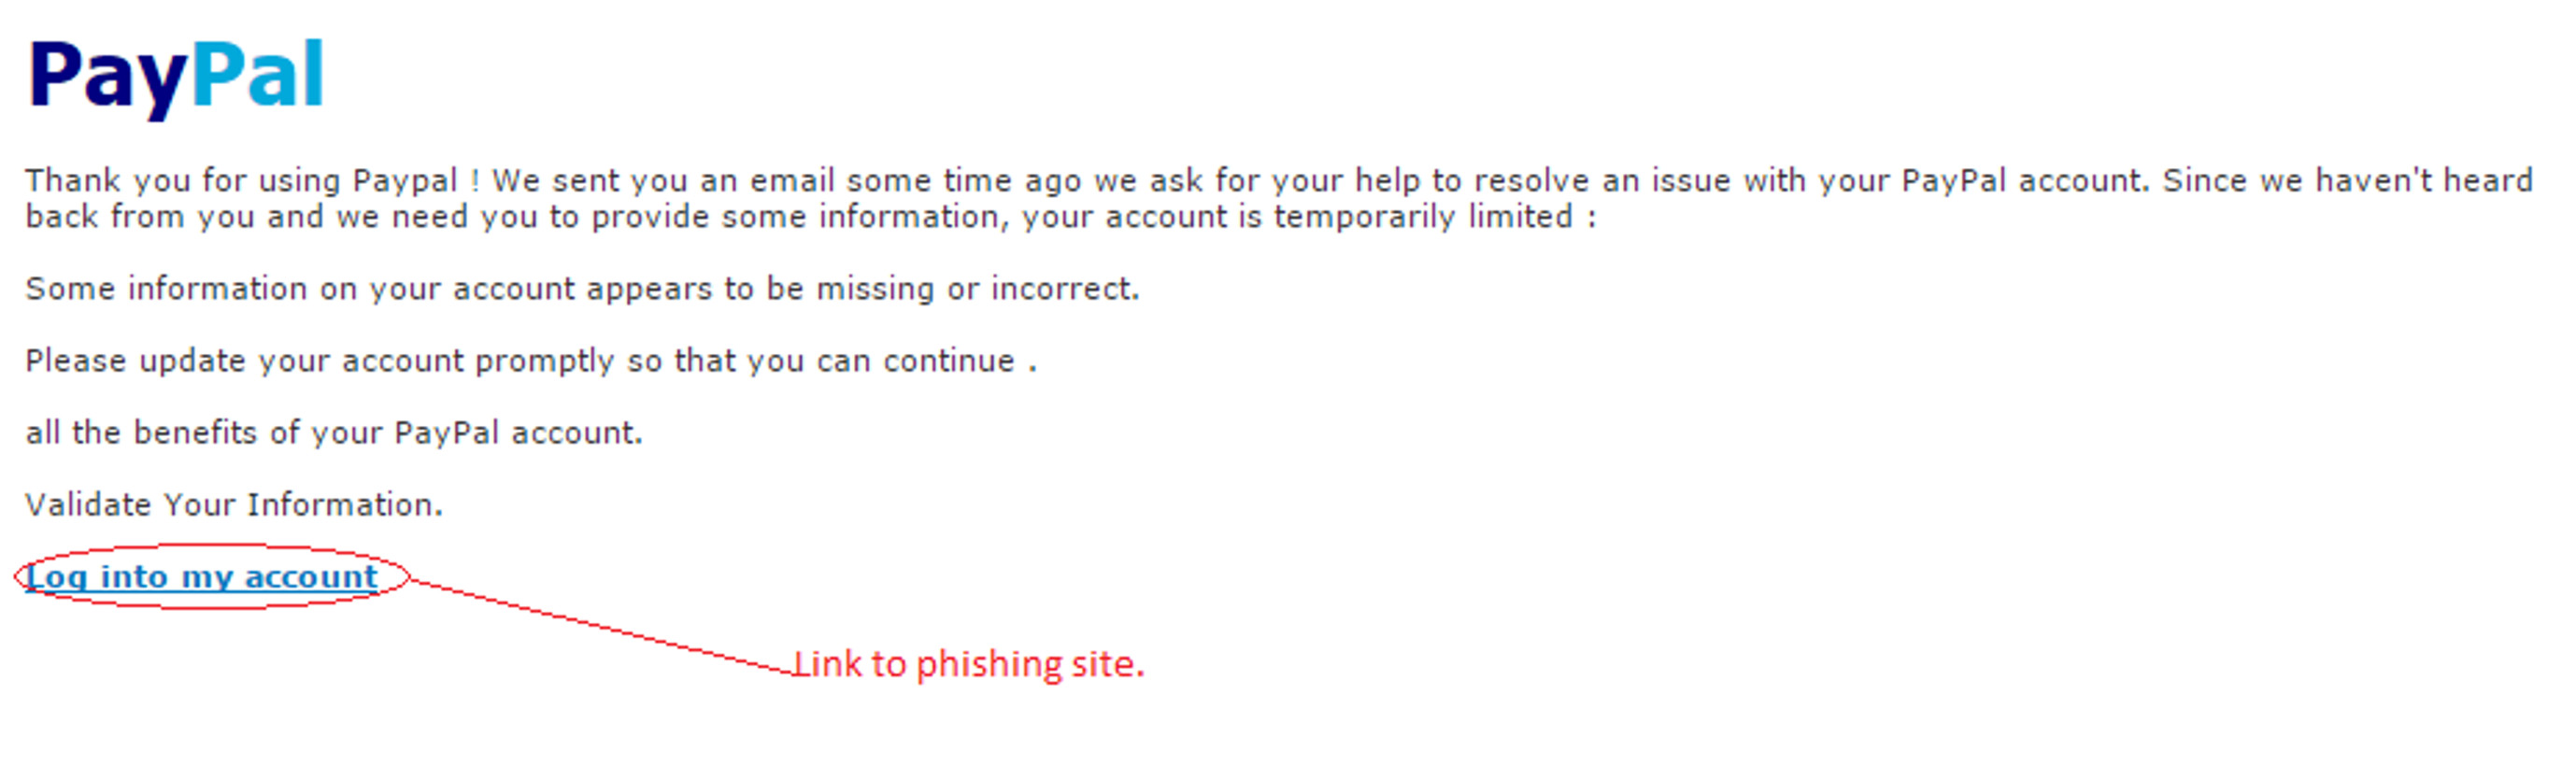 MailShark Validate information says Phishing email